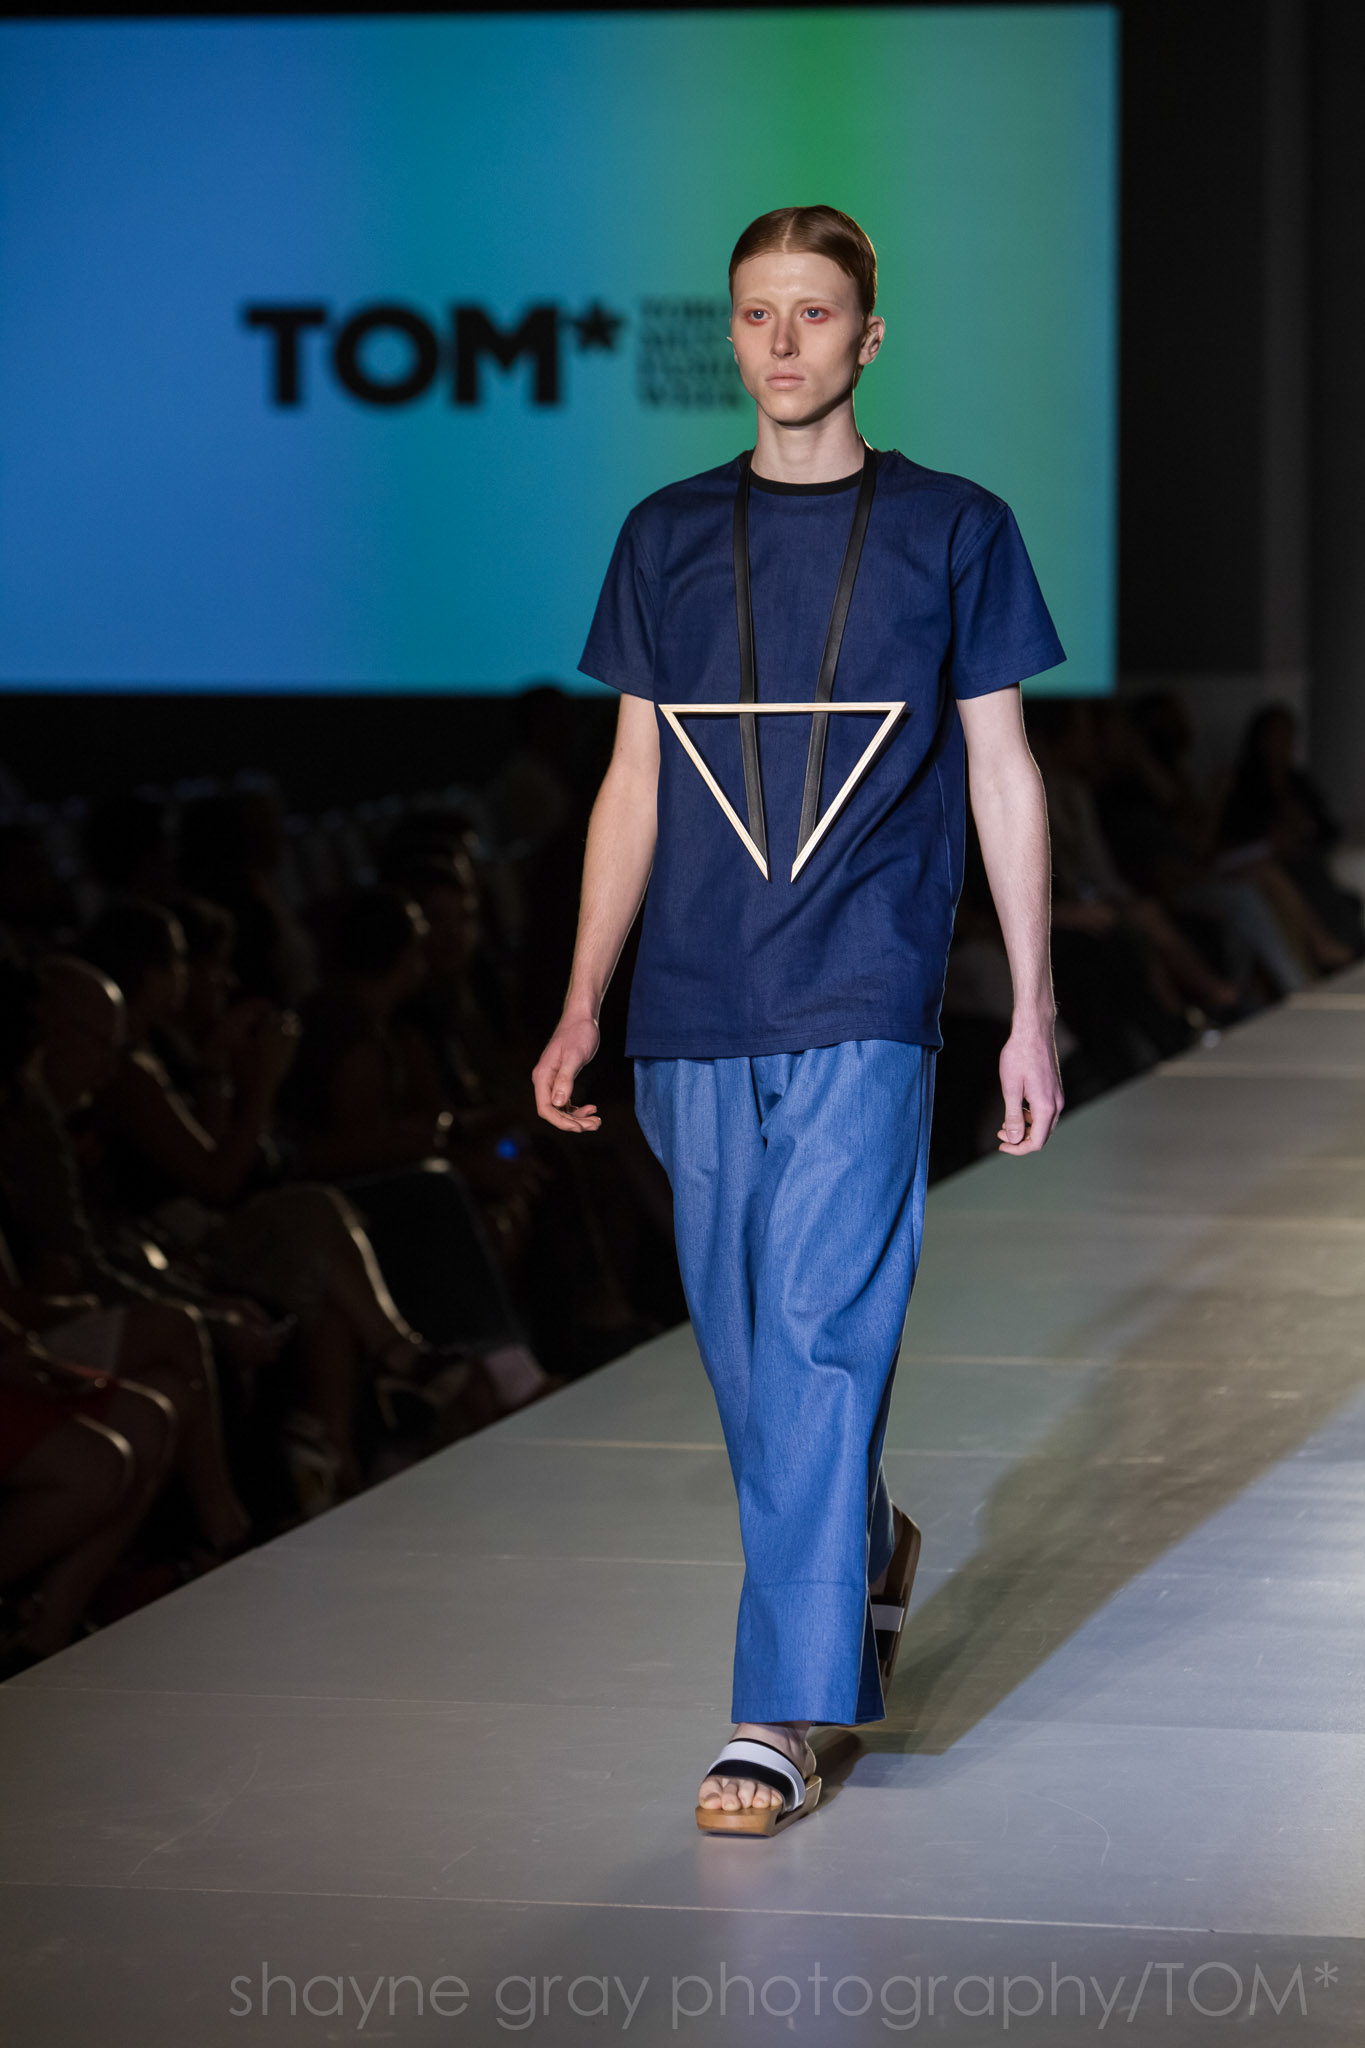 Shayne-Gray-Toronto-men's-fashion_week-TOM-wrkdept-8681.jpg